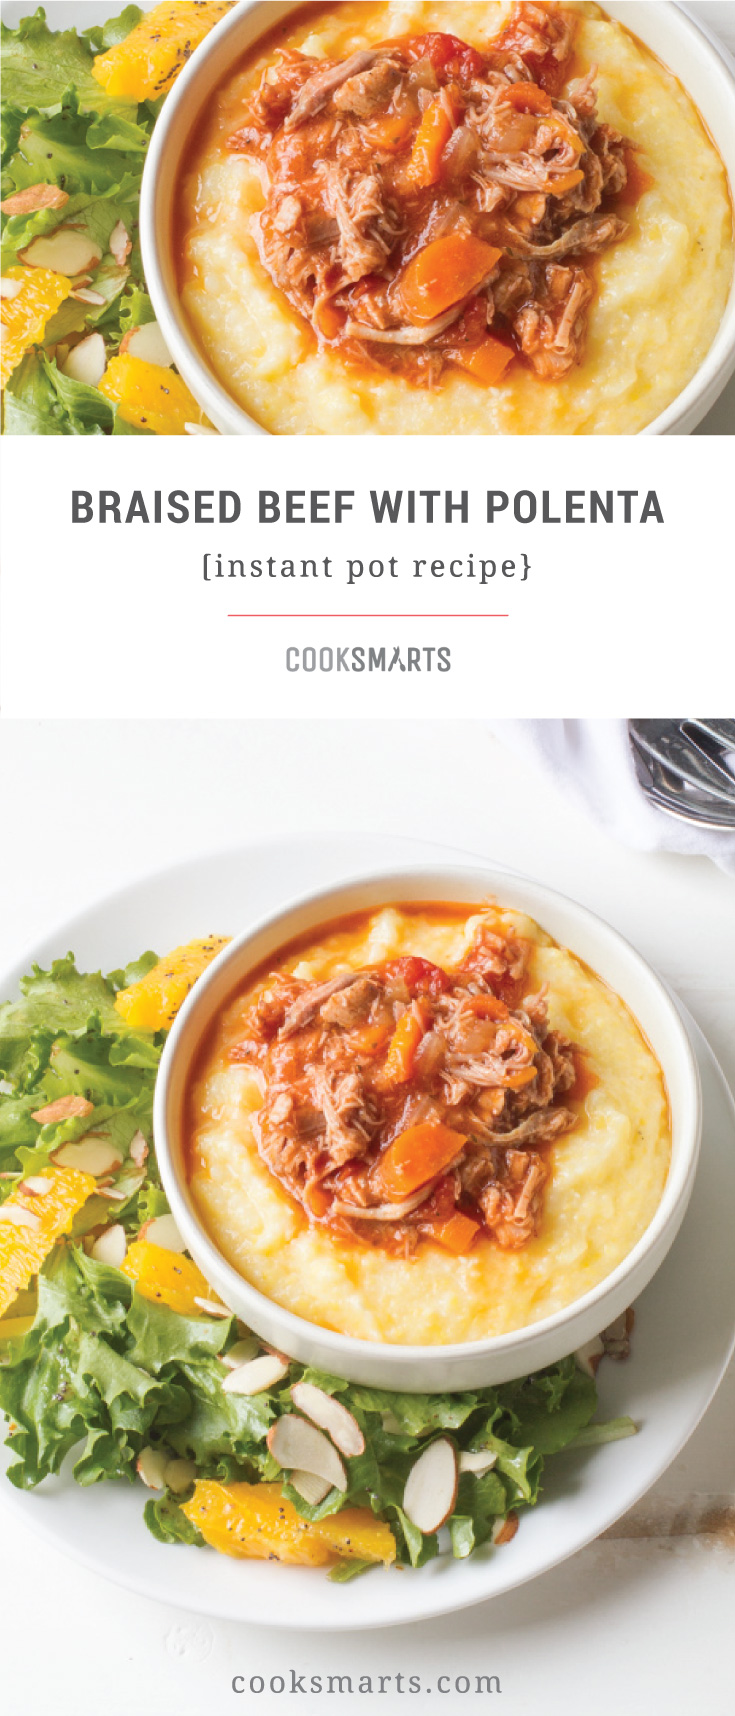 Instant Pot Braised Beef and Creamy Polenta Recipe | Cook Smarts